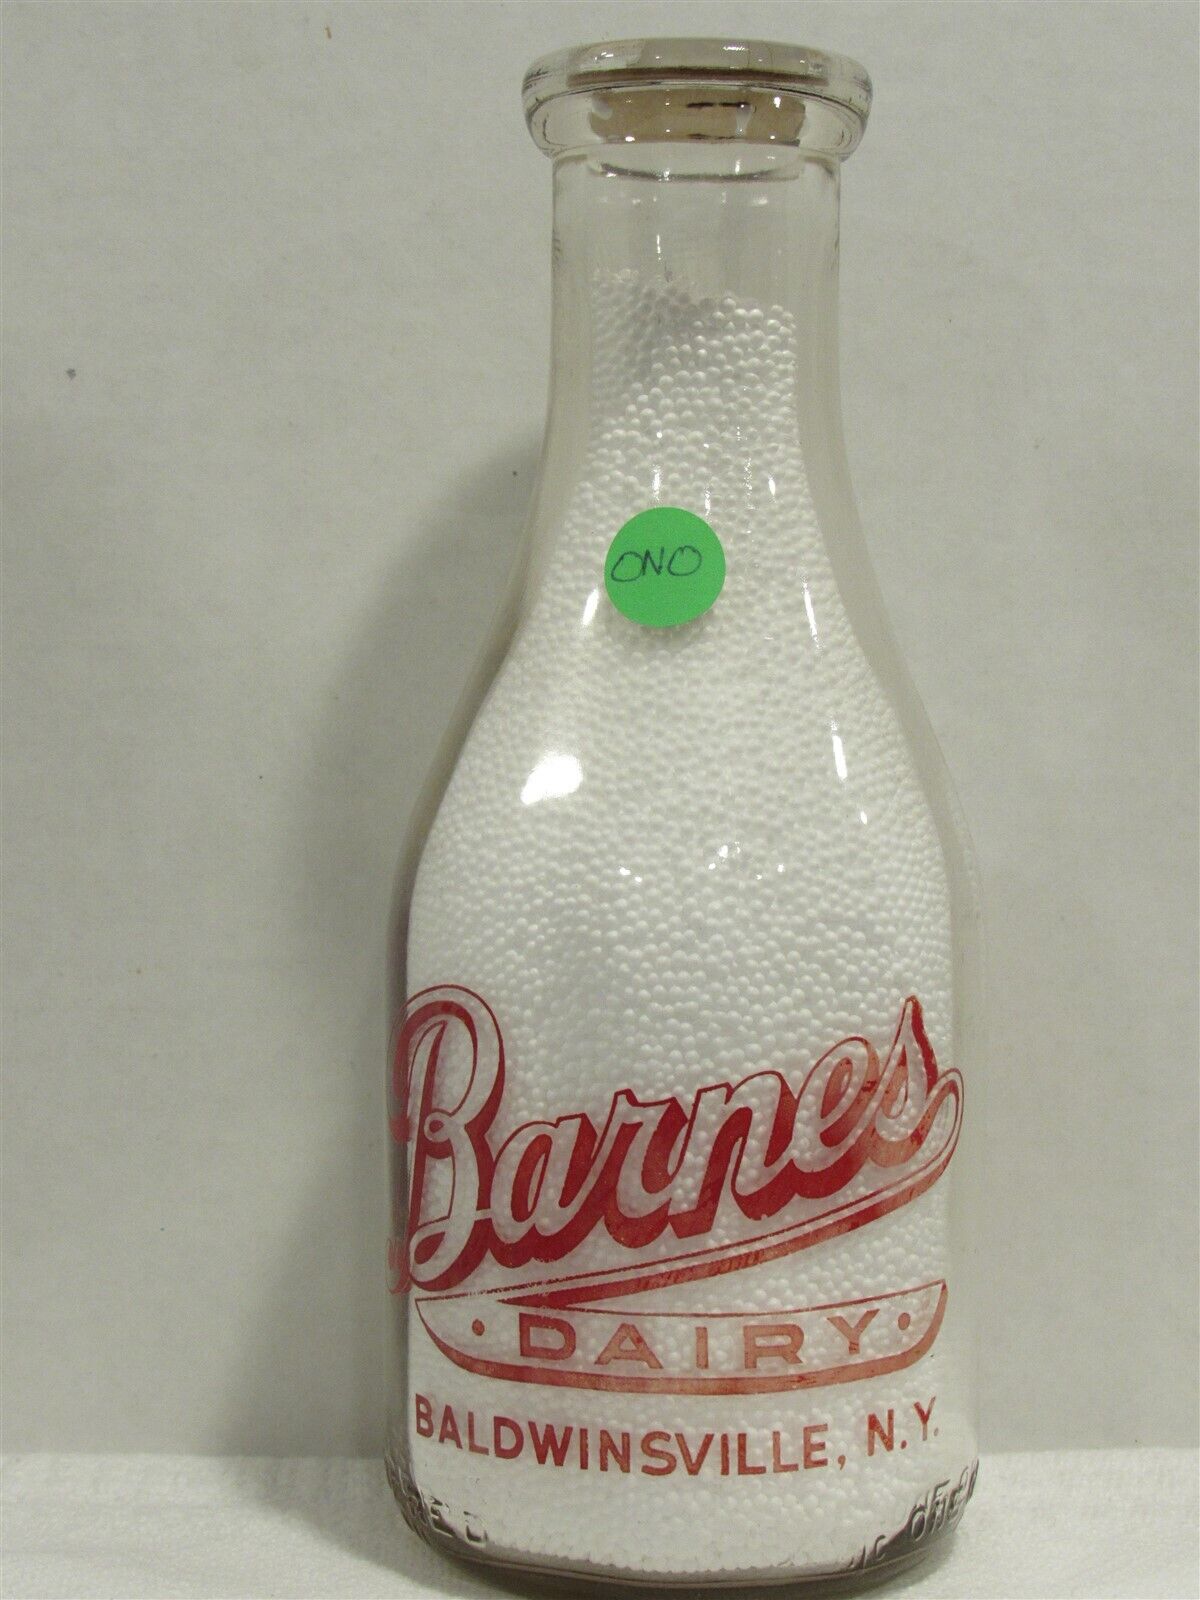 TRPQ Milk Bottle Barnes Dairy Baldwinsville NY ONONDAGA COUNTY Do You Know? 1947